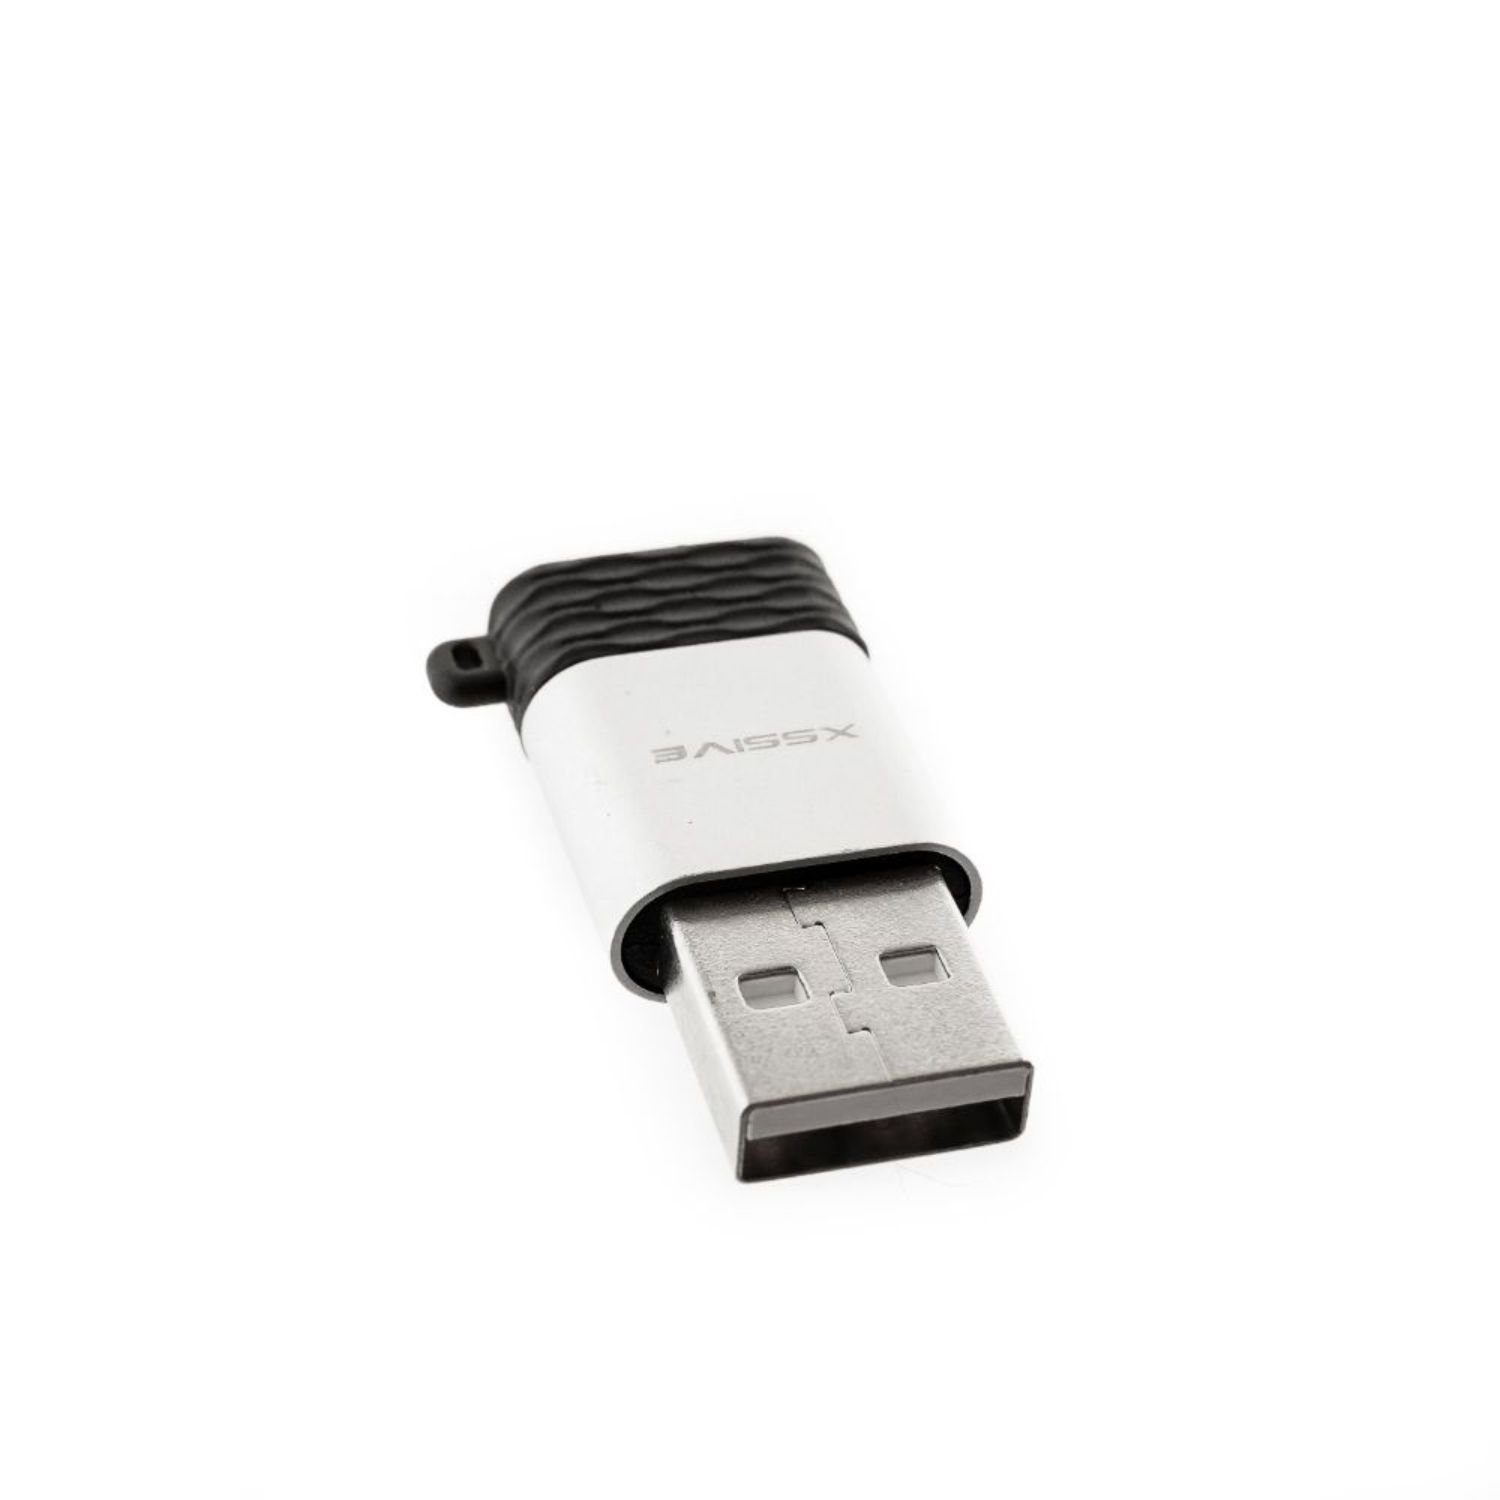 Konverter Adapter. Verlängerungskabel zu USB and Play, COFI Kabel 1453 Schnelladung Plug USB-C